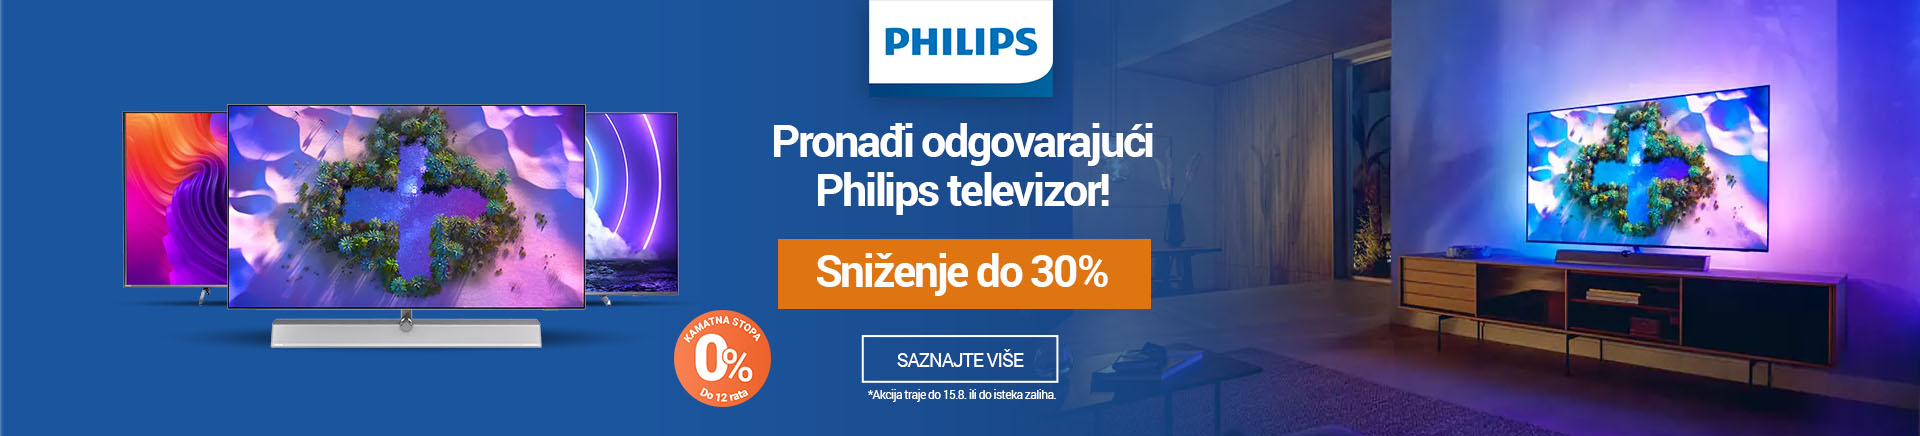 BIH_Pronadi odgovarajuci Philips televizor_TABLET 768 X 436.jpg